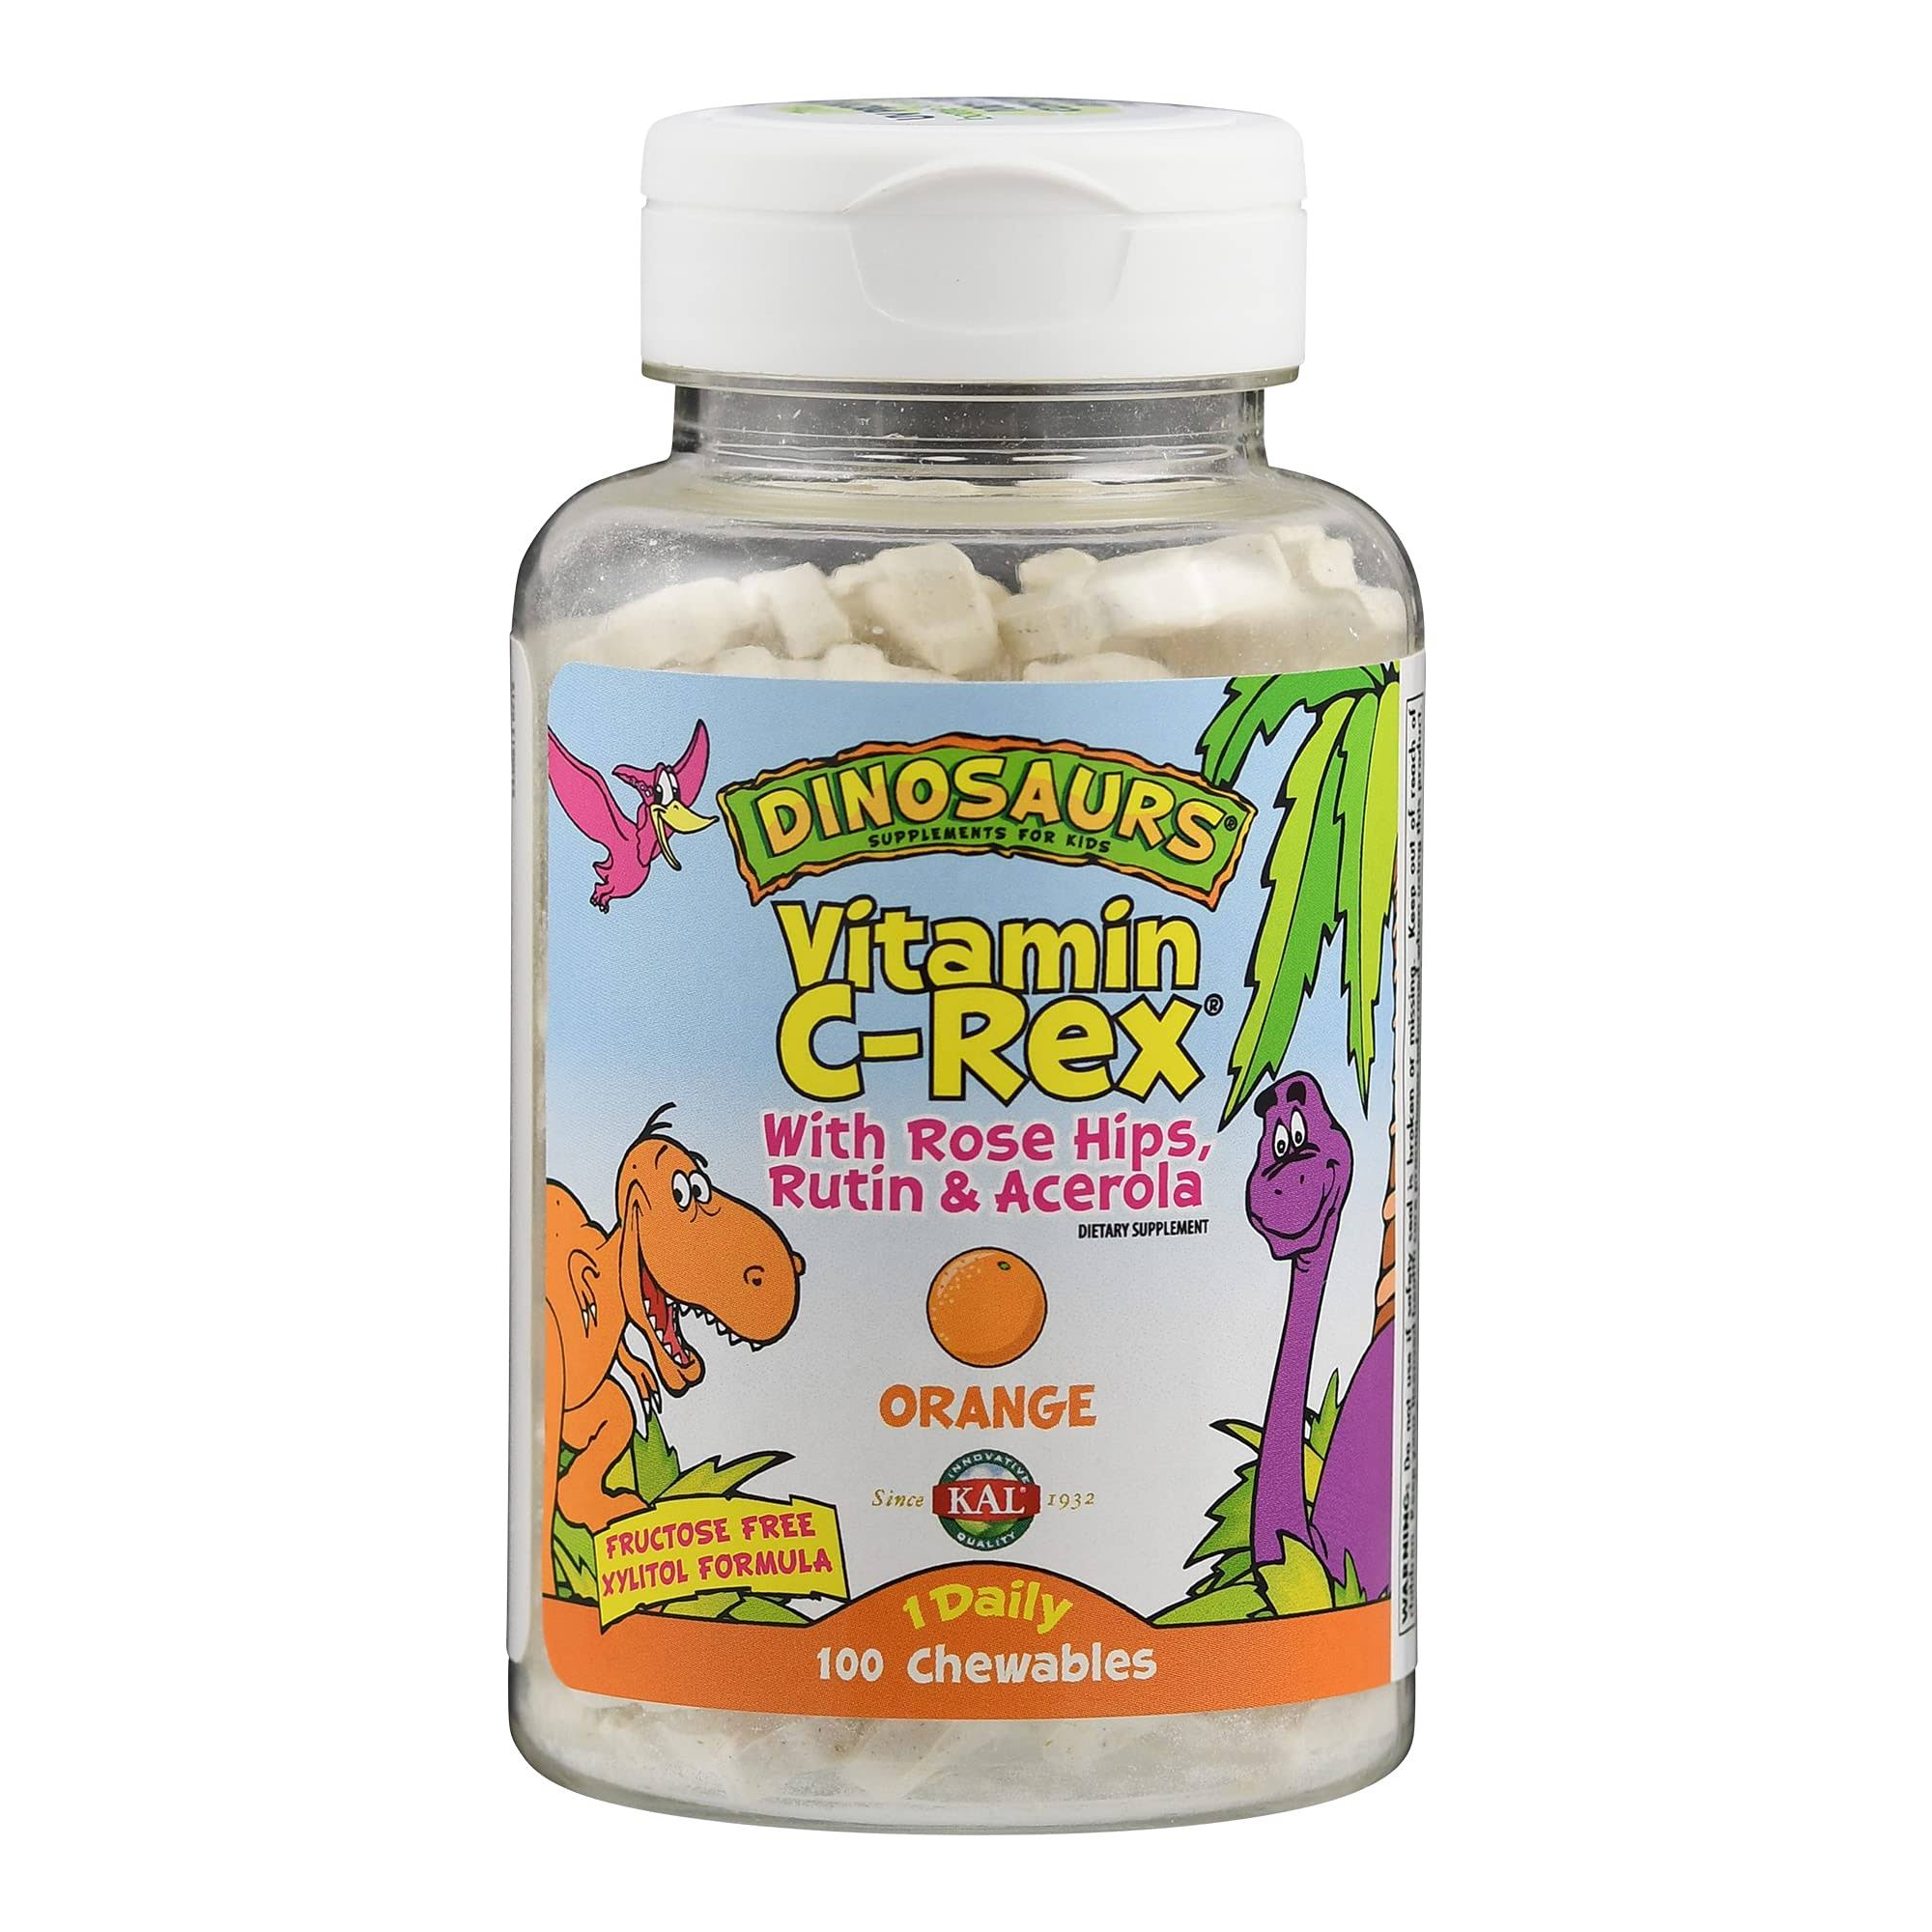 Kal Dinosaurs Vitamin C-Rex Dietary Supplement - Orange, 100 Chewables